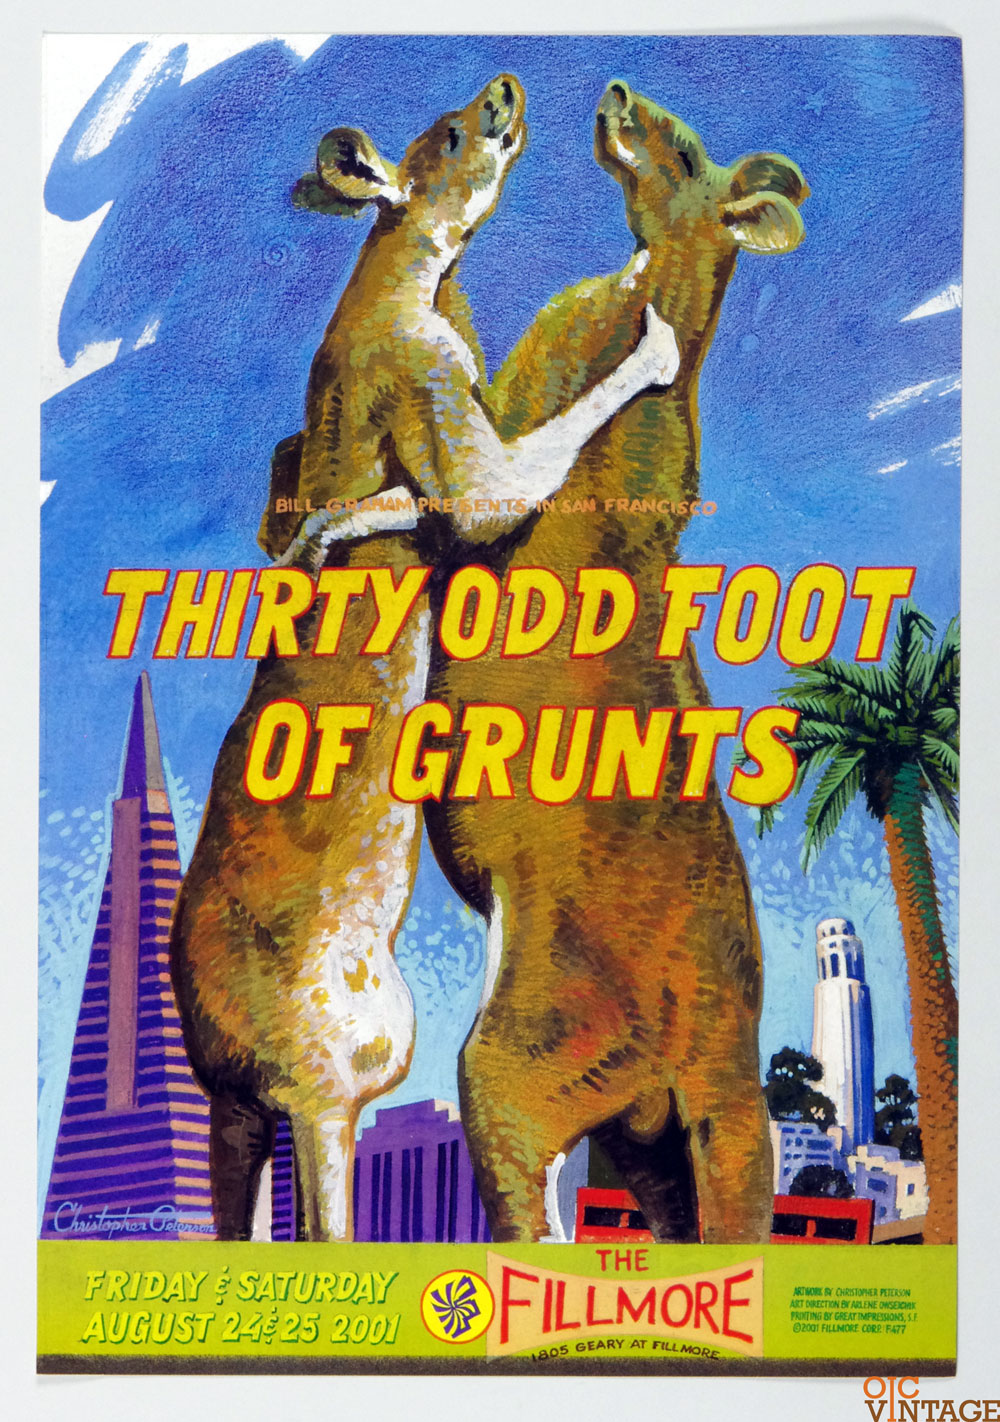 Thirty Odd Foot of Grunts Poster 2001 Aug 24 New Fillmore San Francisco